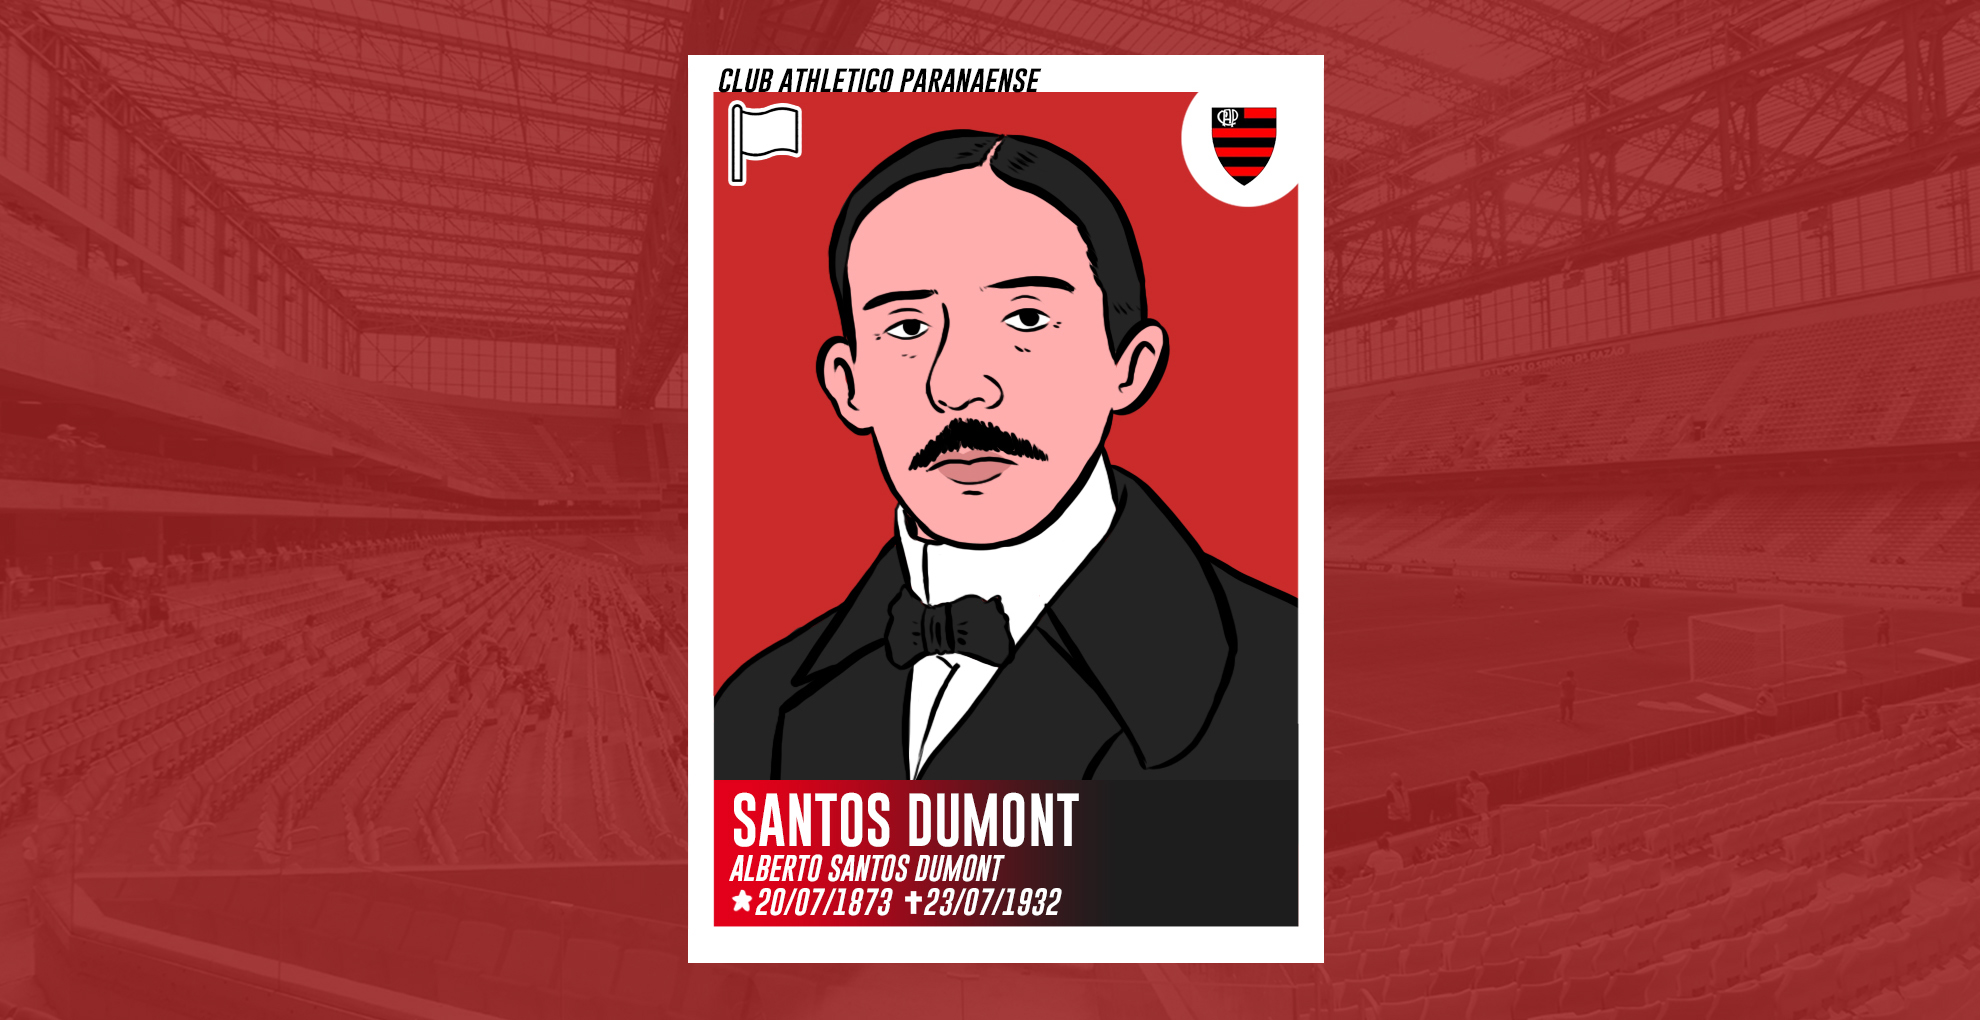  Santos Dumont, o inventor 